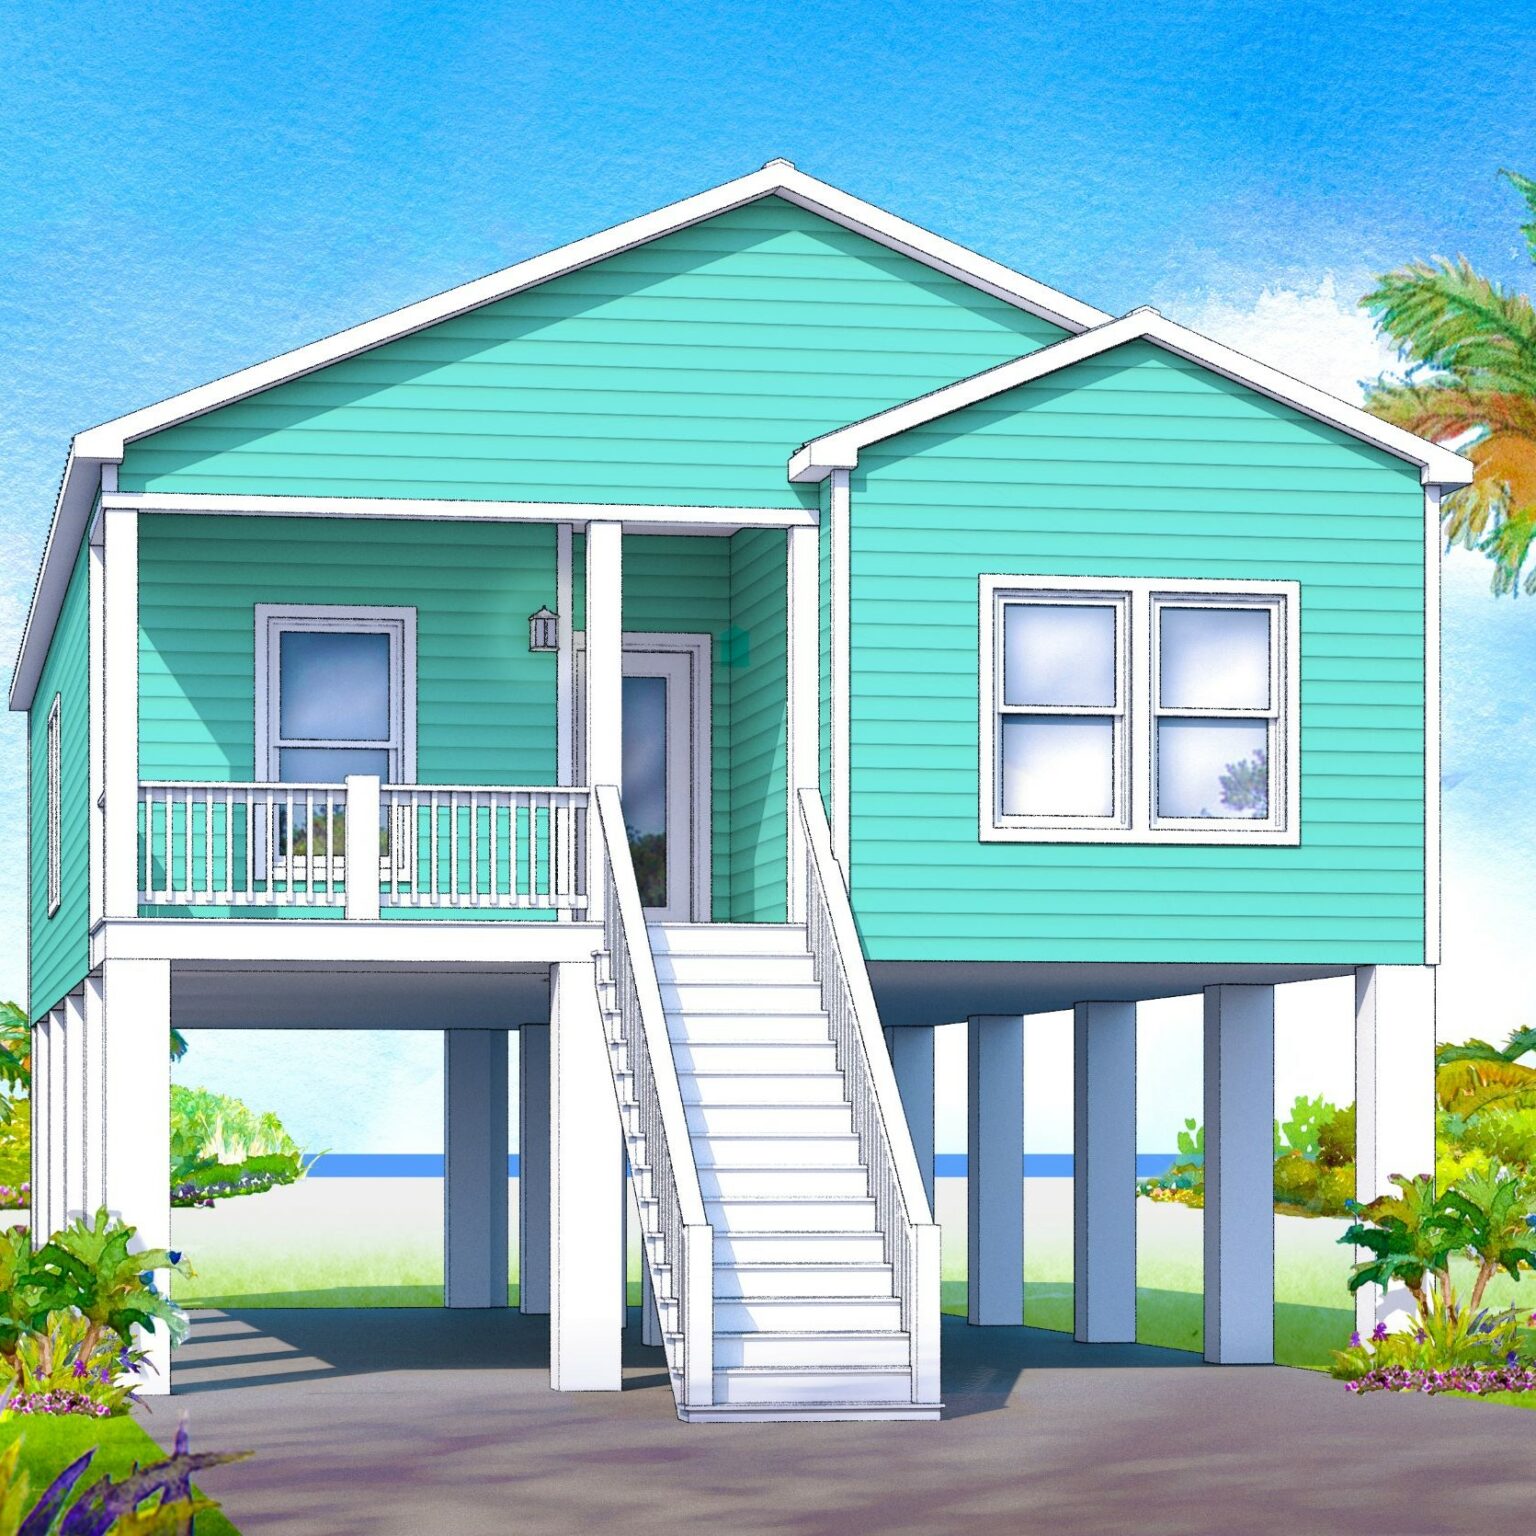 Pensacola Beach 2 Story Stilt Home